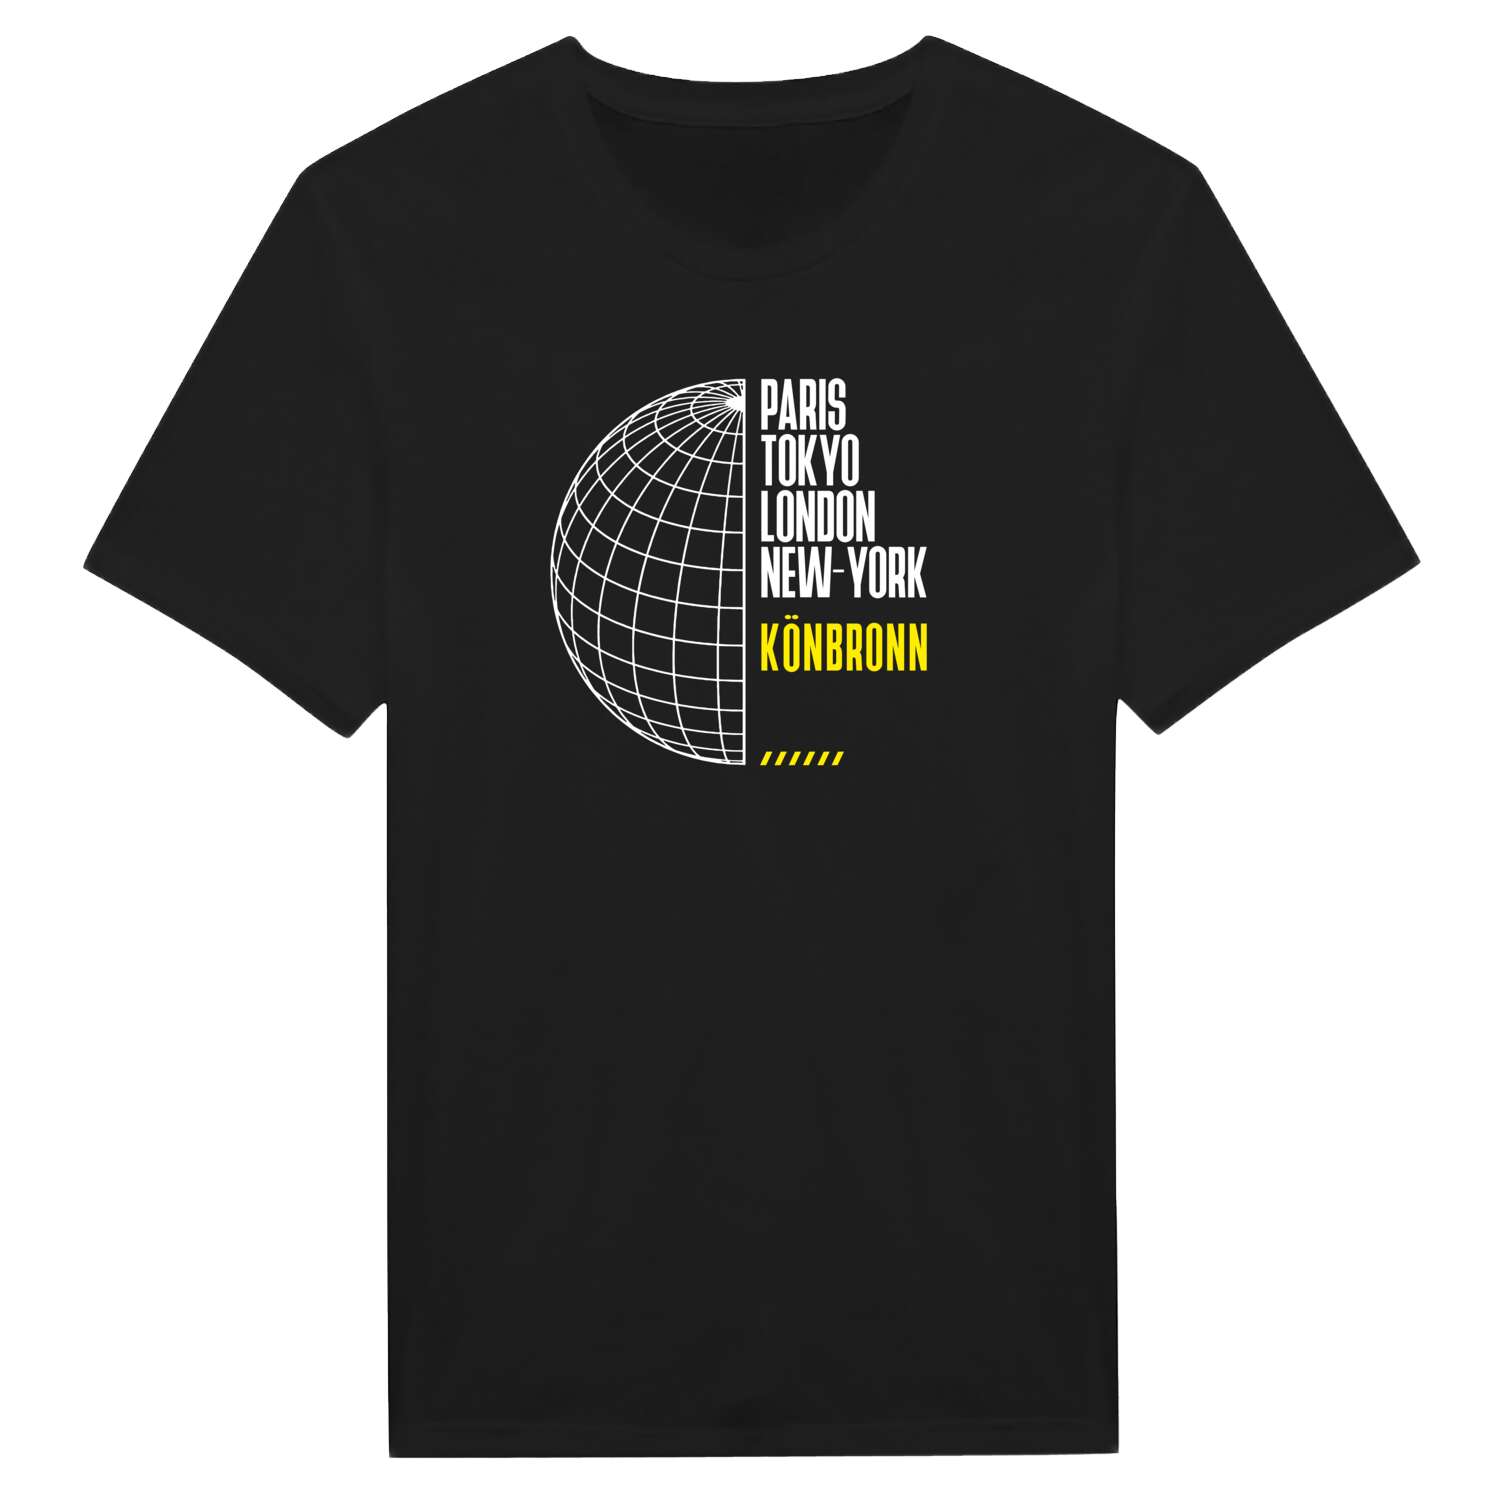 Könbronn T-Shirt »Paris Tokyo London«